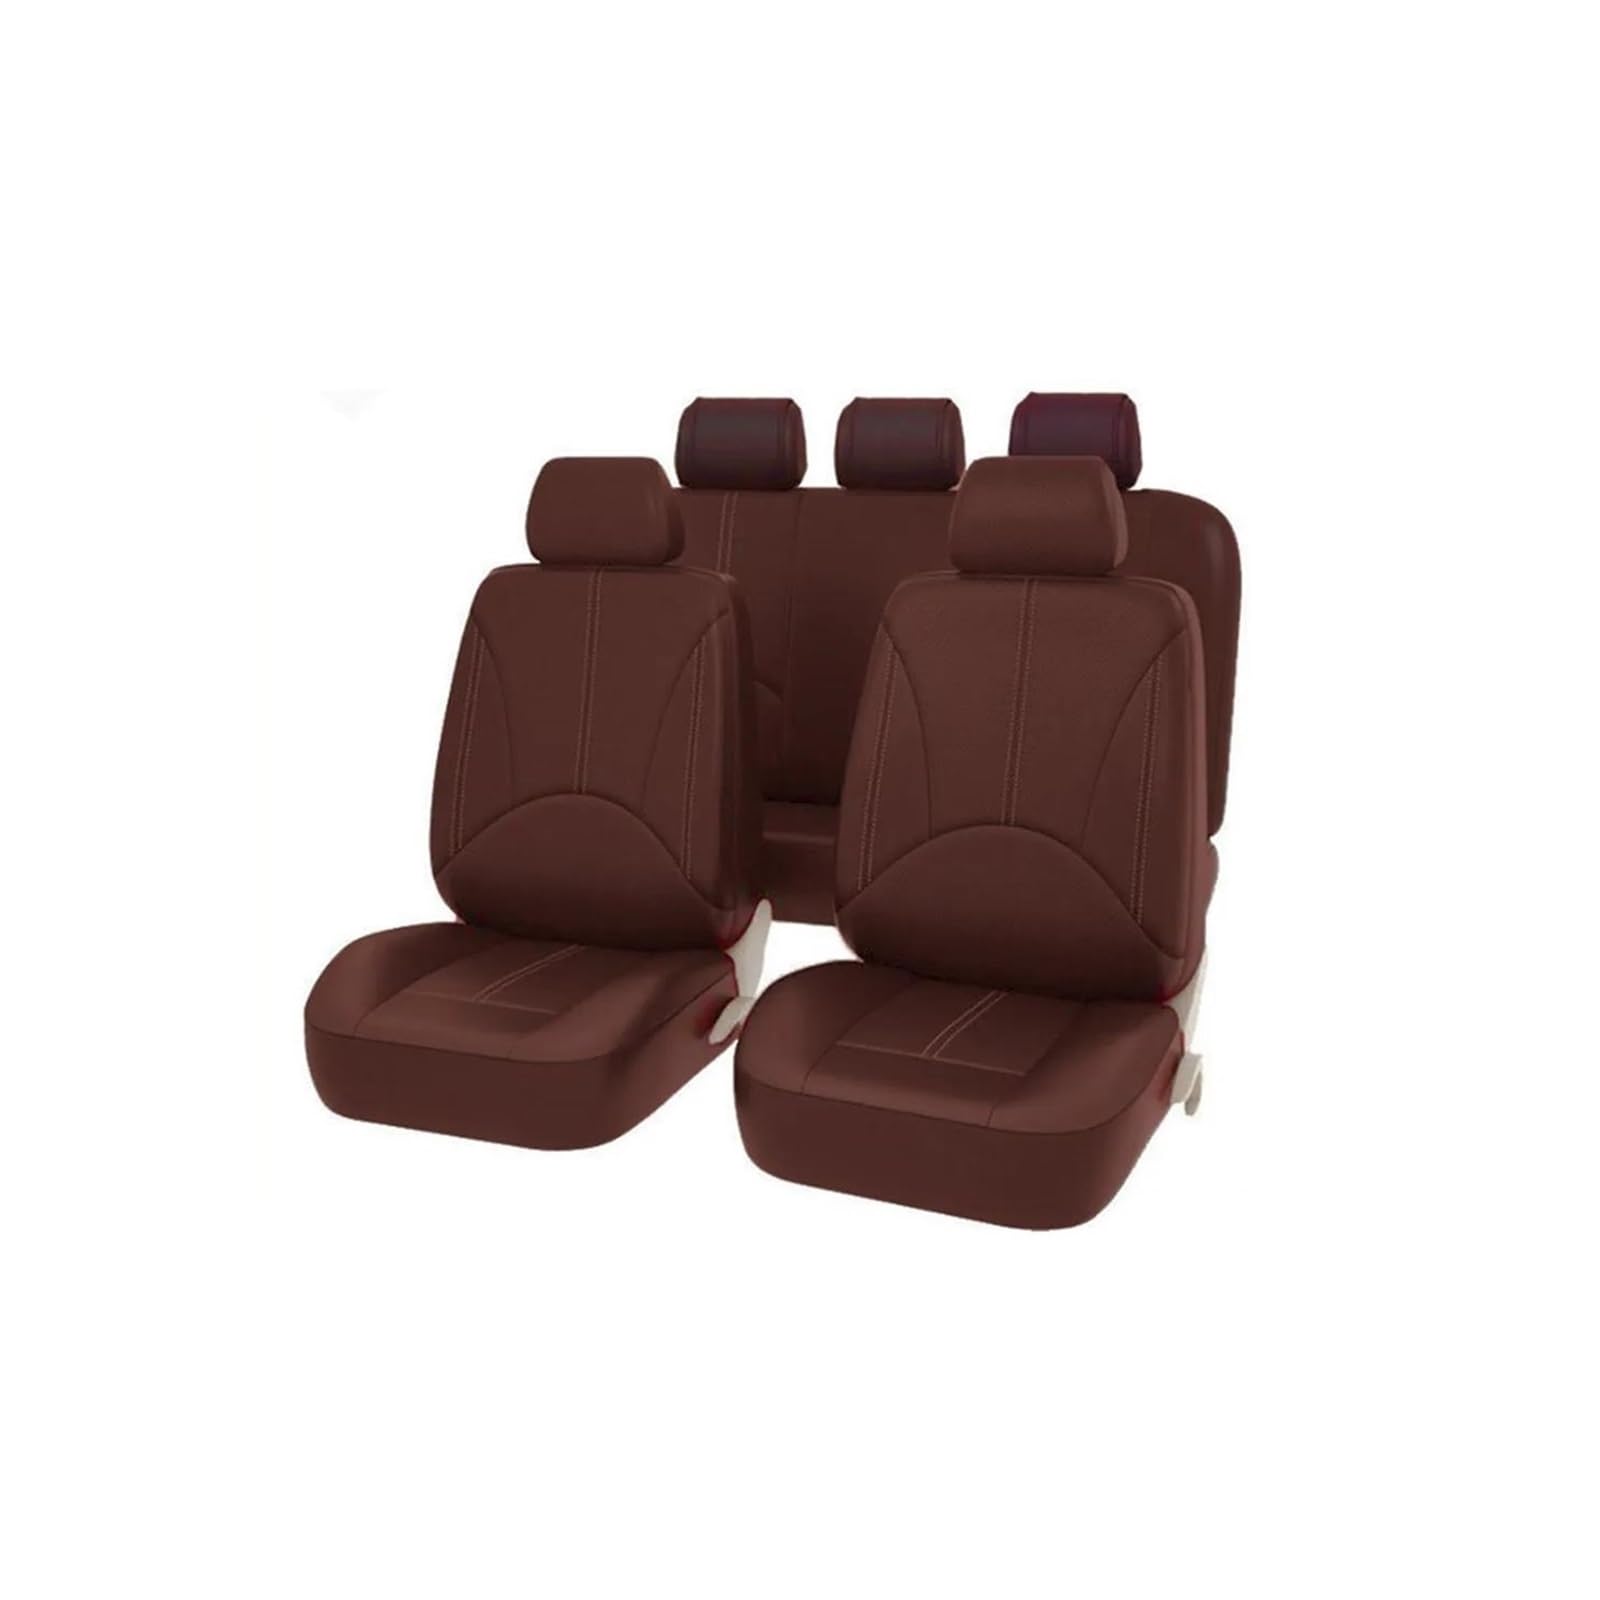 Für RX300 GX ES250 ES350 GX460 GX400 GS350 GS450 IS430 IS460 IS600 IX570 Autositzbezüge Autokissen Auto-Sitzbezüge(5 Seats-Coffee) von FIXCOR